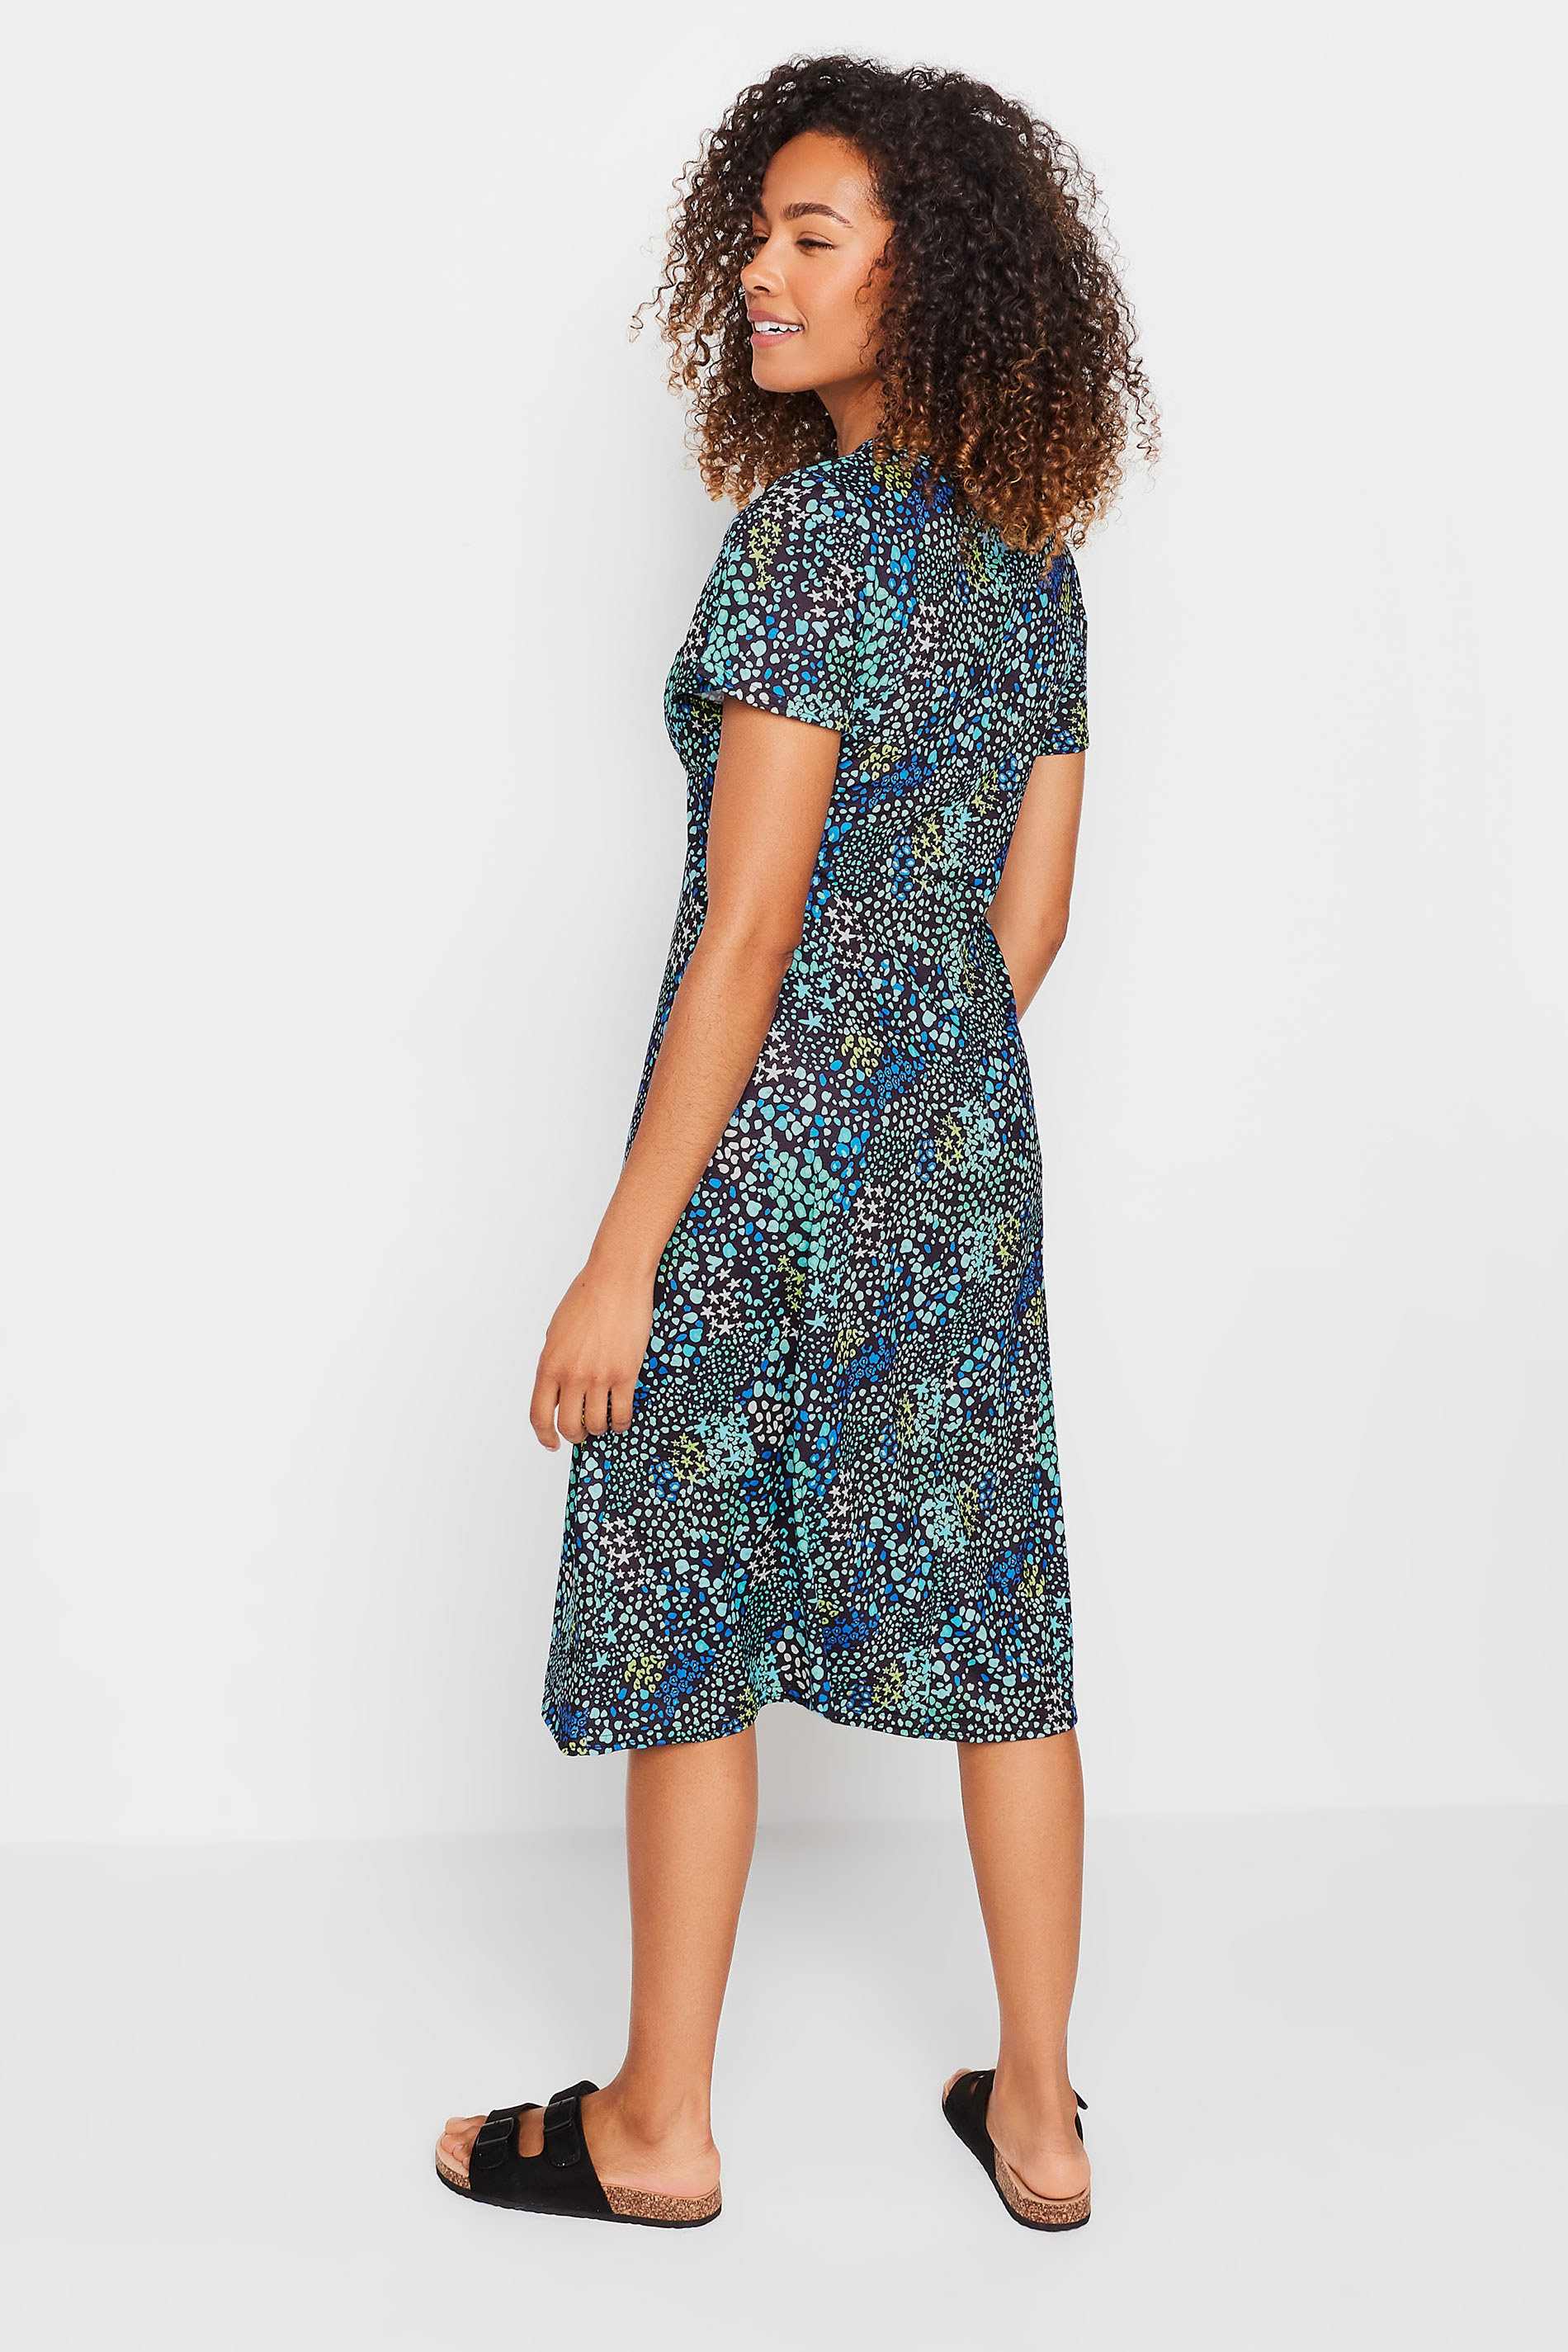 M&Co Blue Floral Print Short Sleeve Midi Dress | M&Co 3